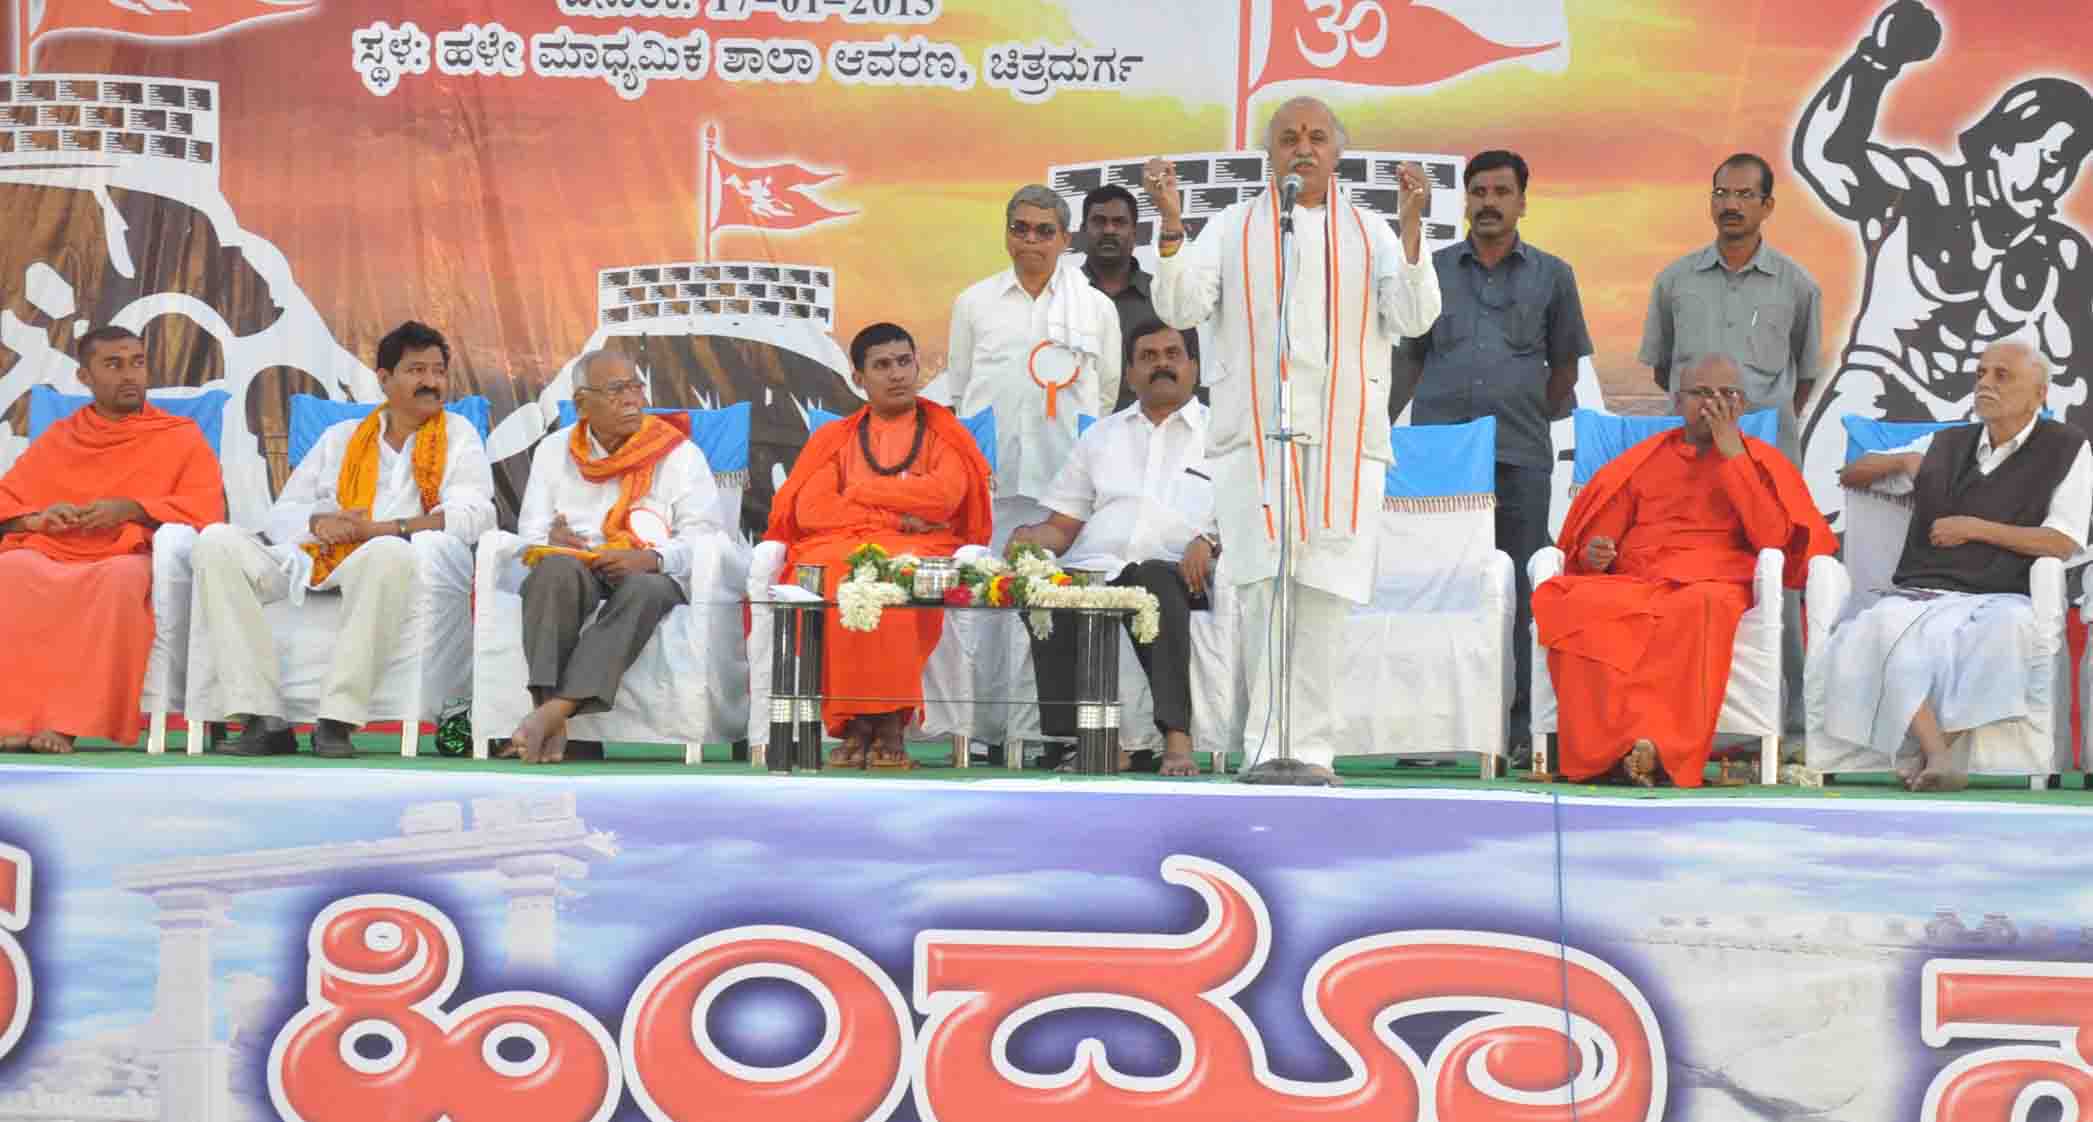 Dr Pravin Togadia addressing HINDU SAMAVESH at Chitradurga in Karnataka on Janauary 17, 2015 Saturday